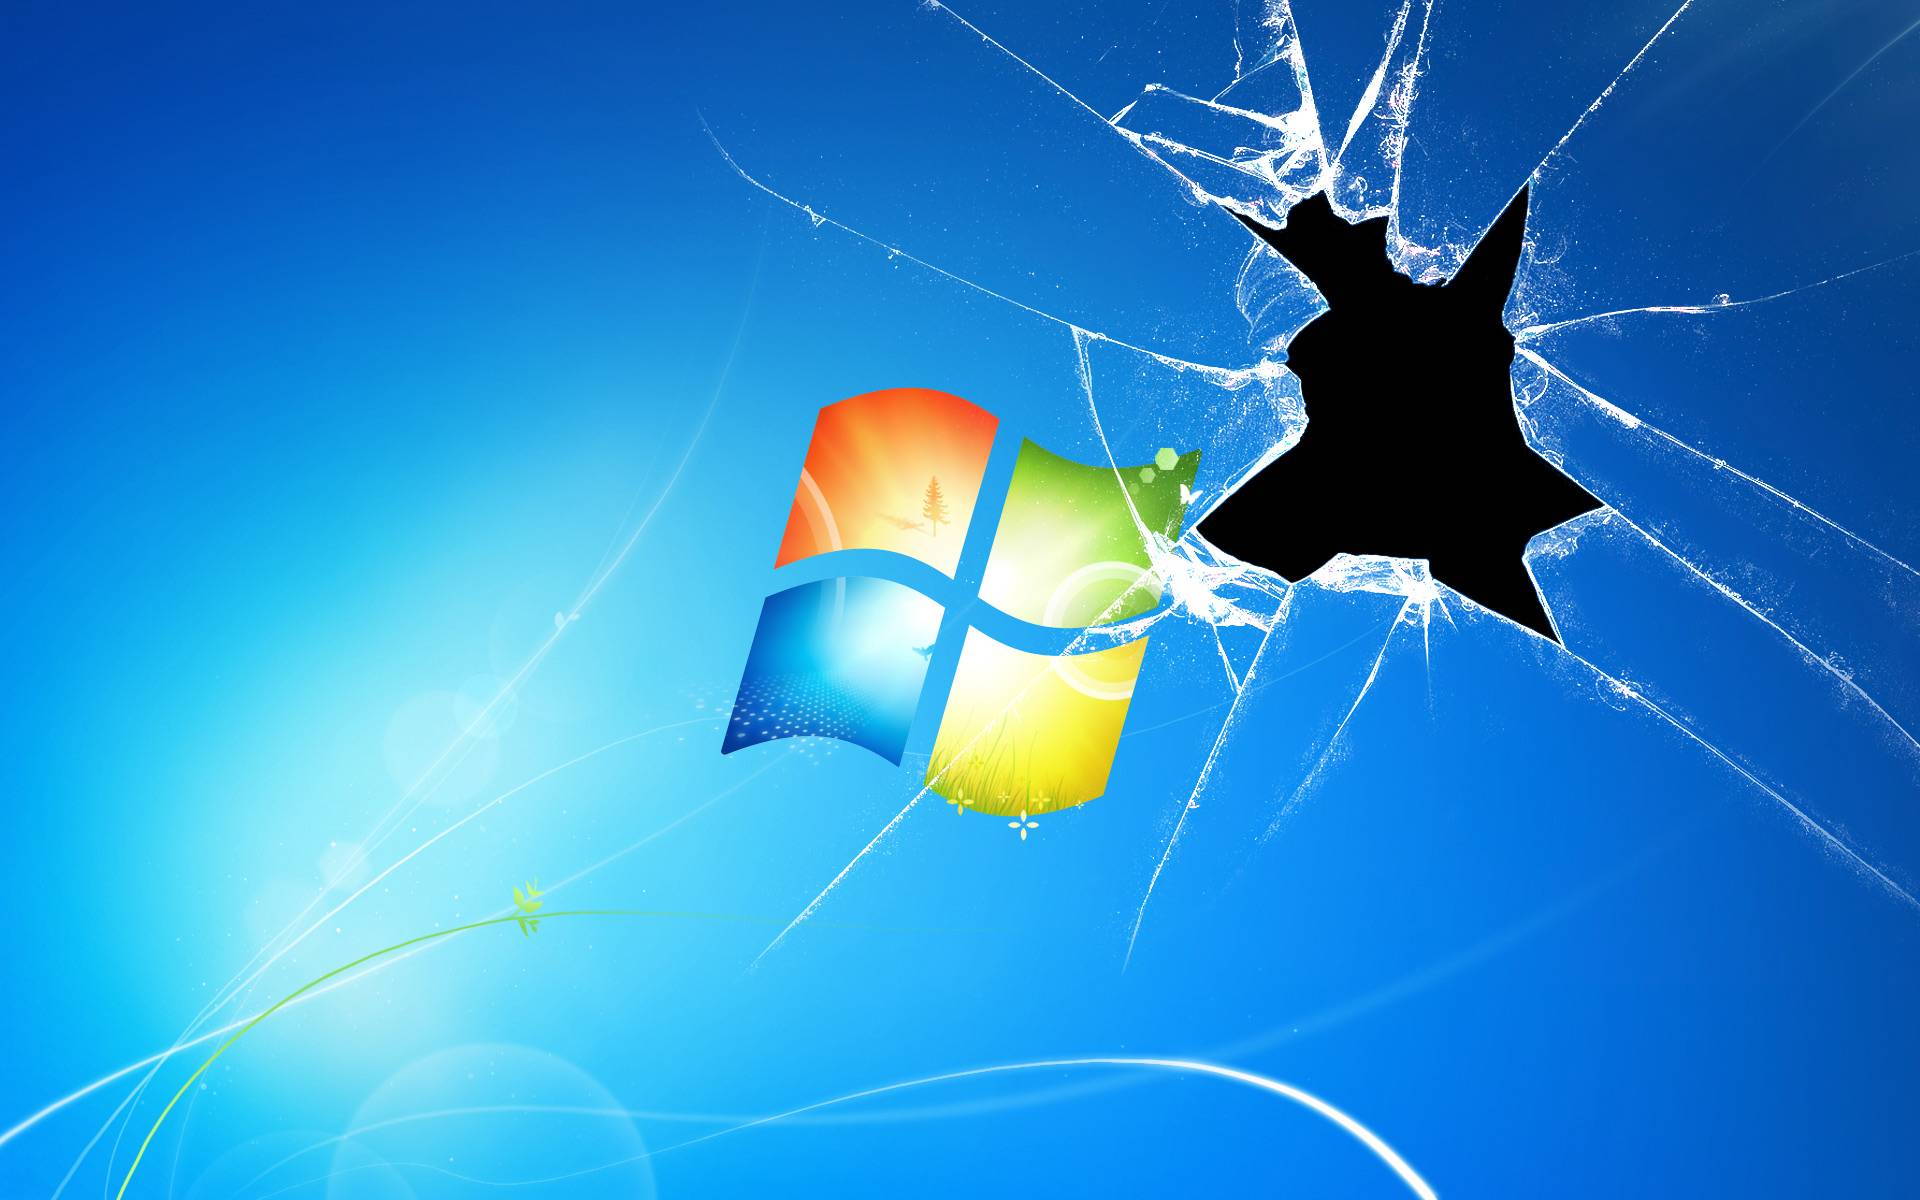 48+] Cracked Screen Wallpaper Windows 10 - WallpaperSafari